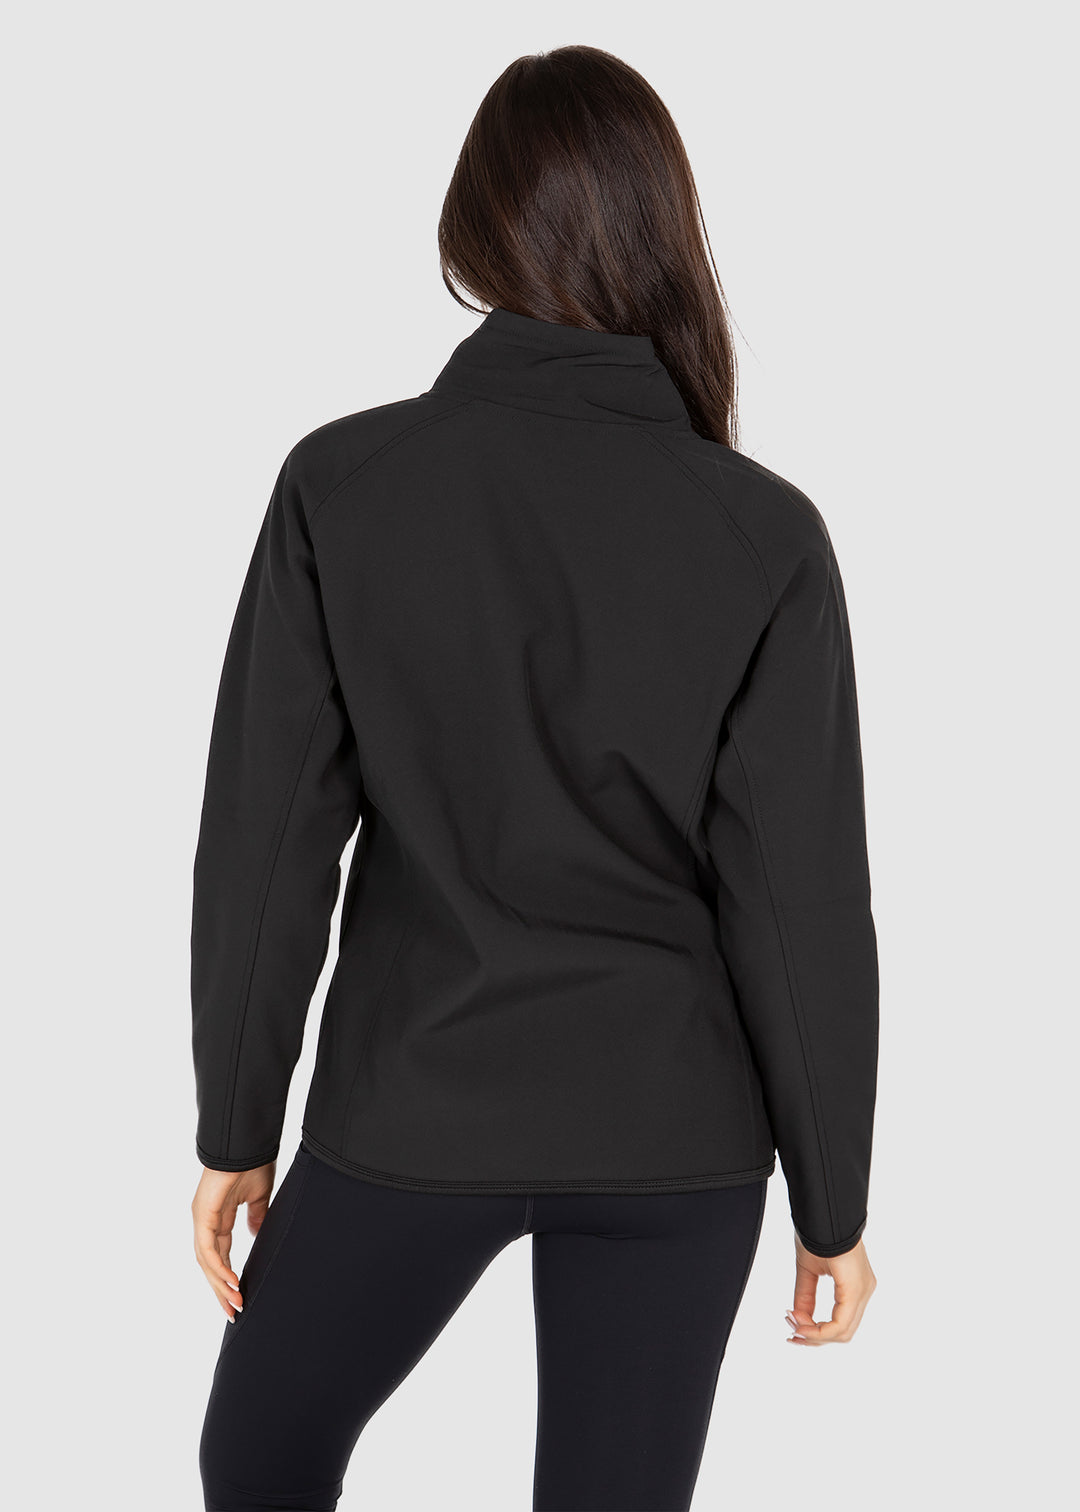 UNIT Lark Ladies Zip Jacket (Soft Shell)